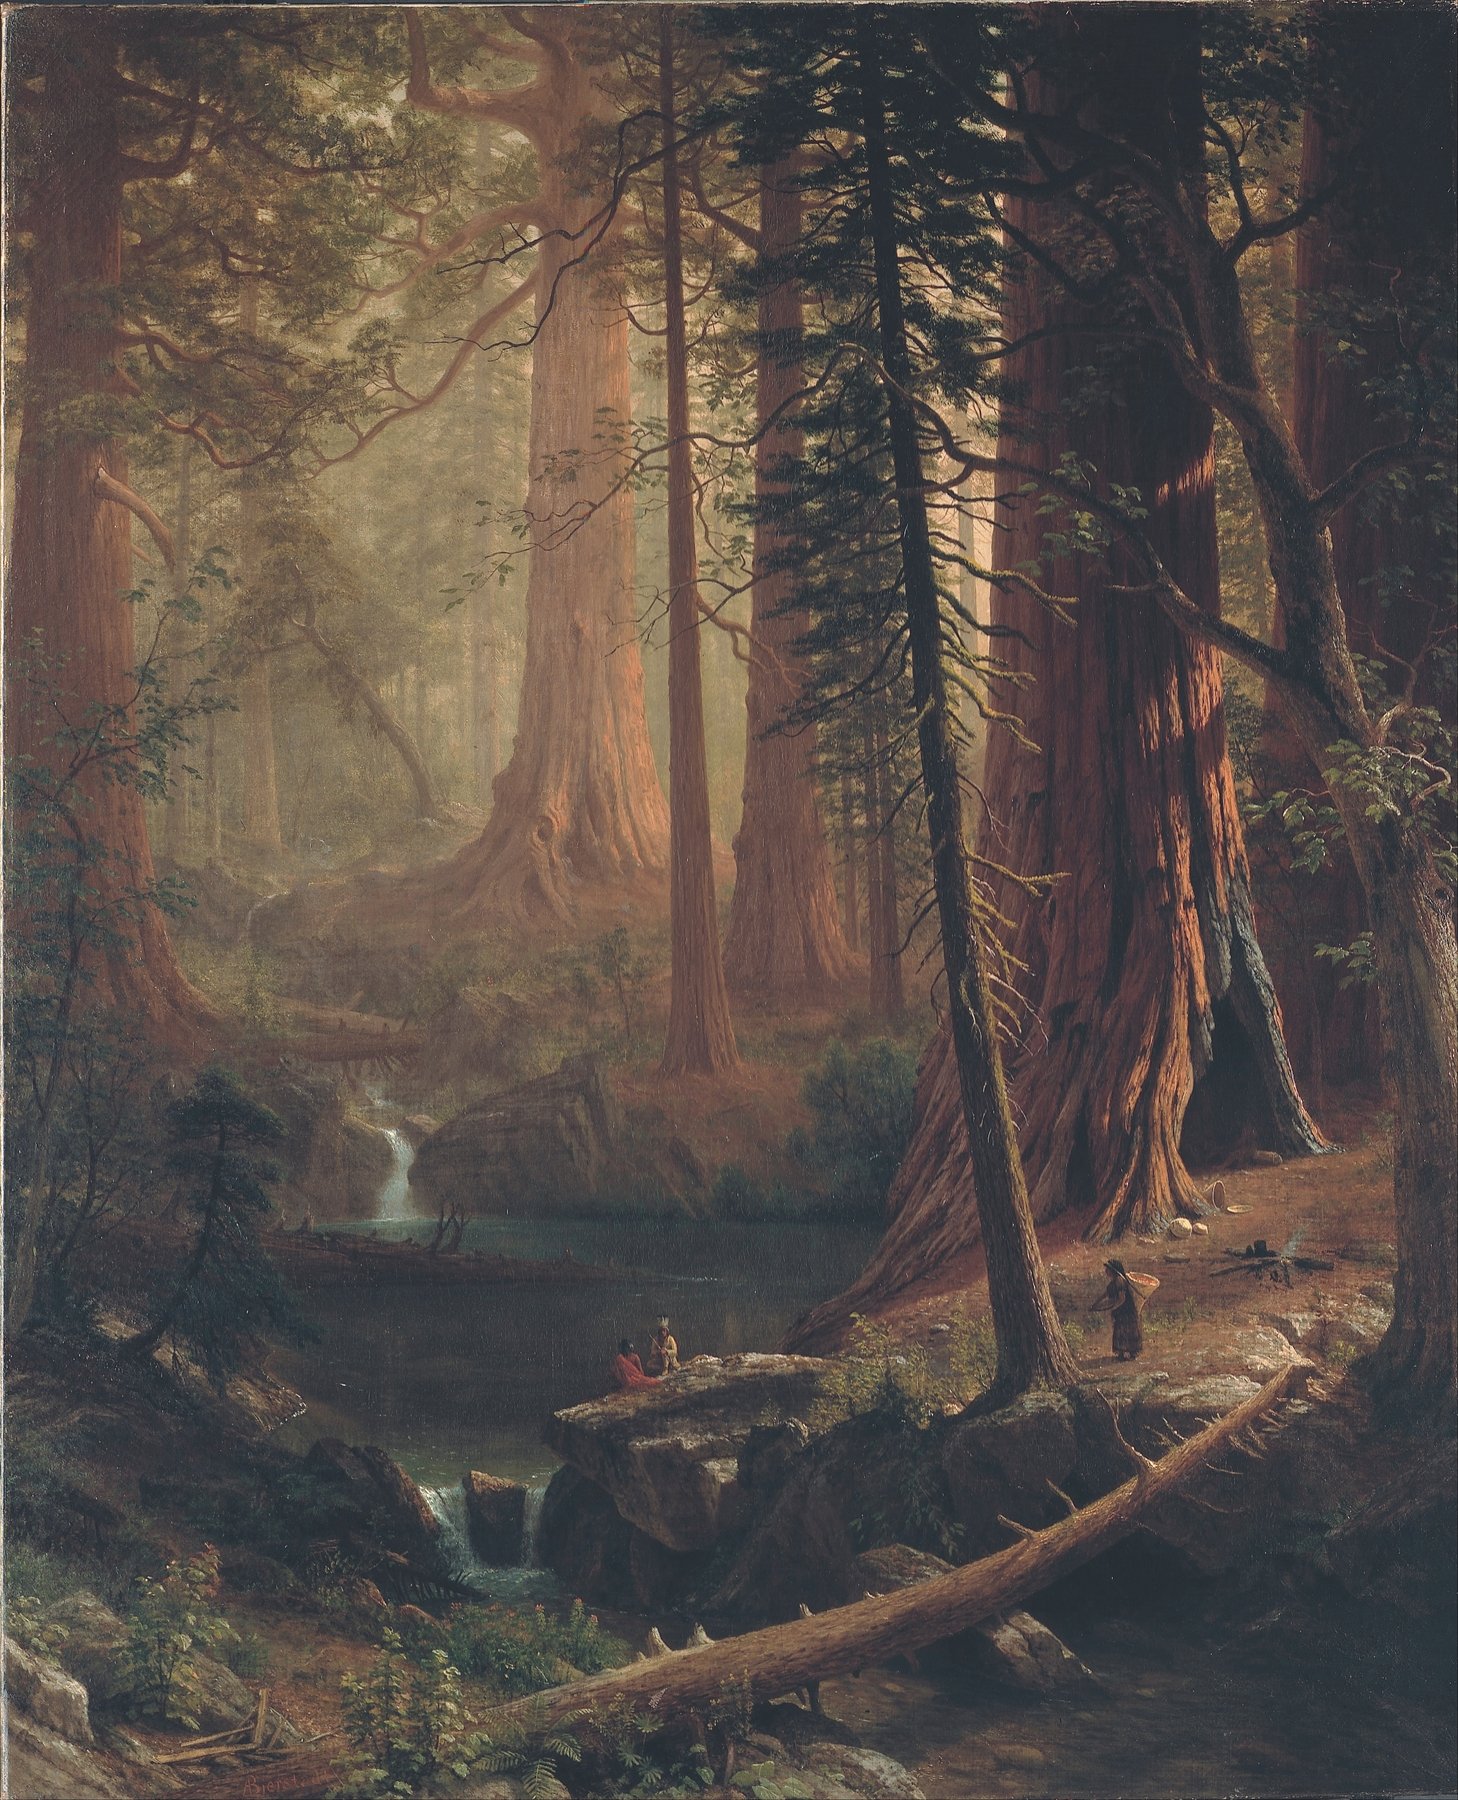 Giant Redwood Trees of California (1874)